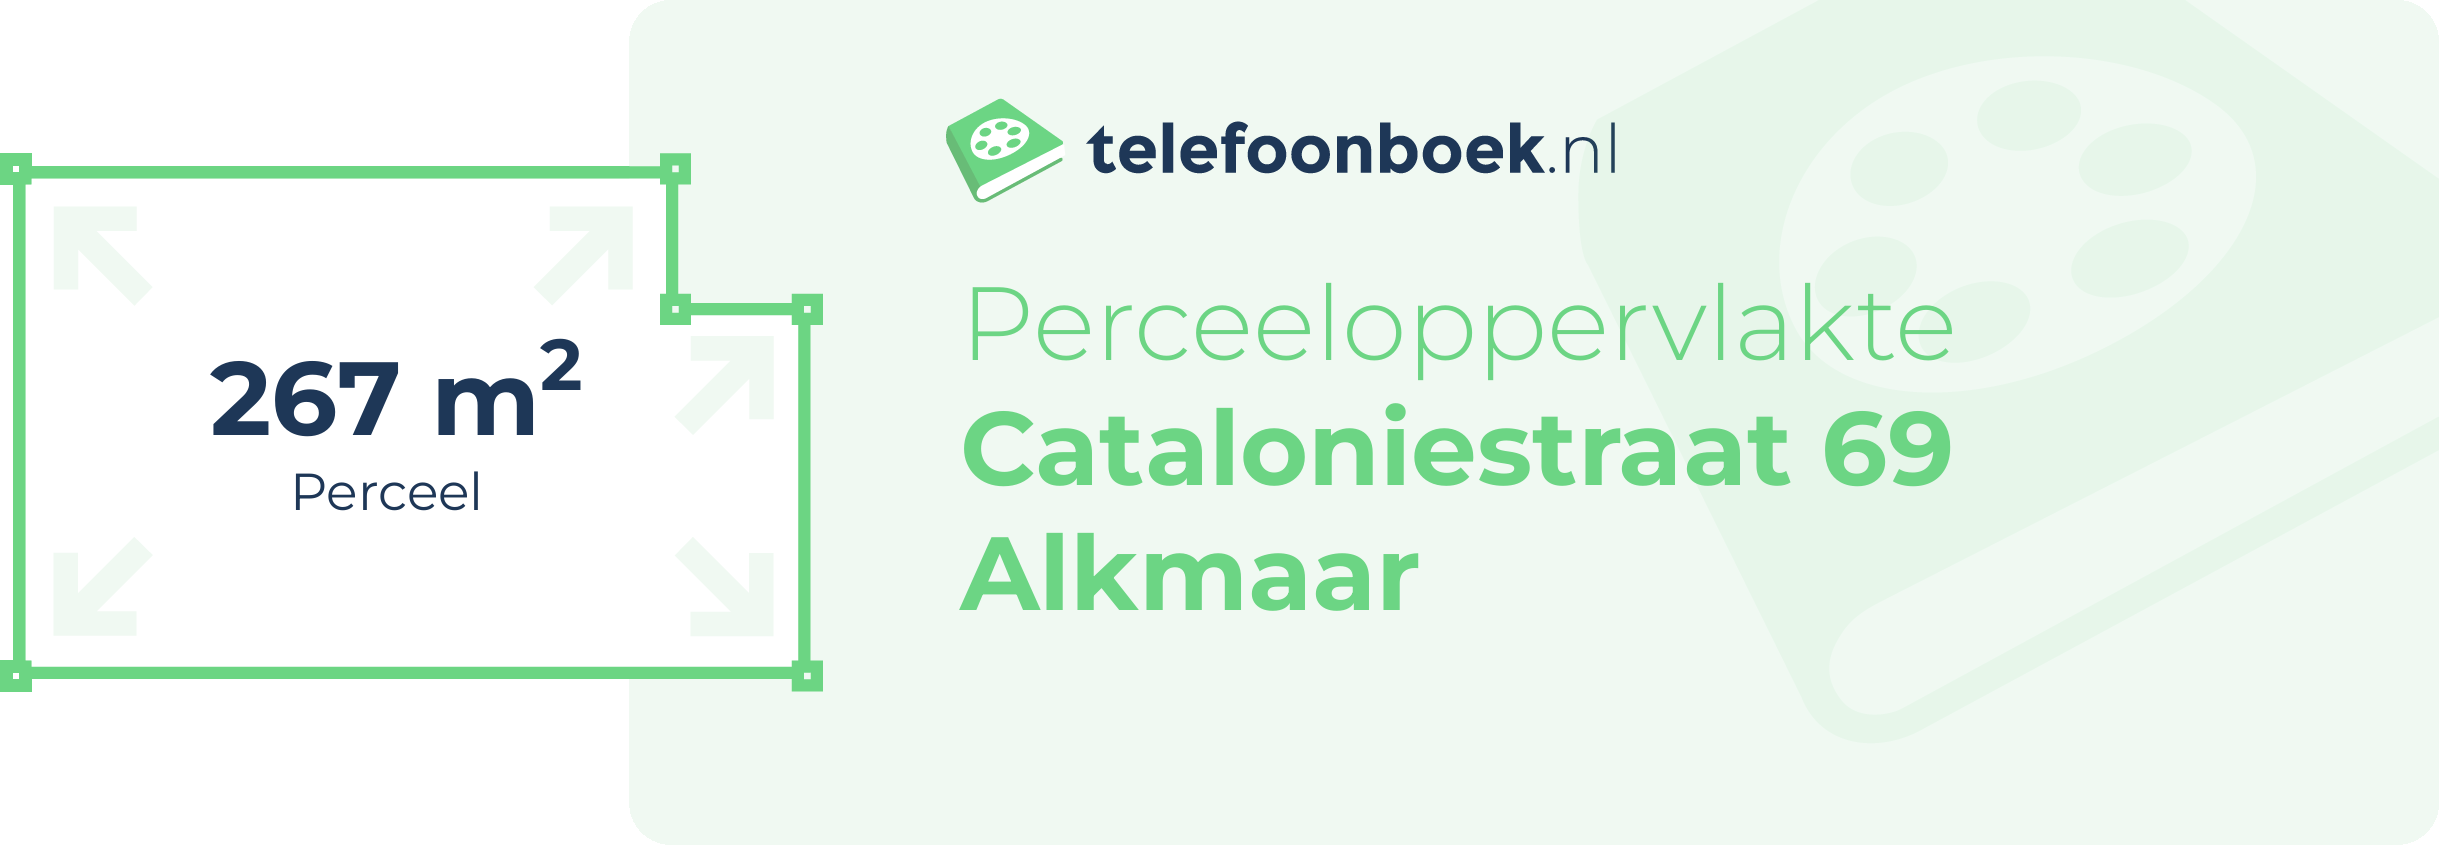 Perceeloppervlakte Cataloniestraat 69 Alkmaar